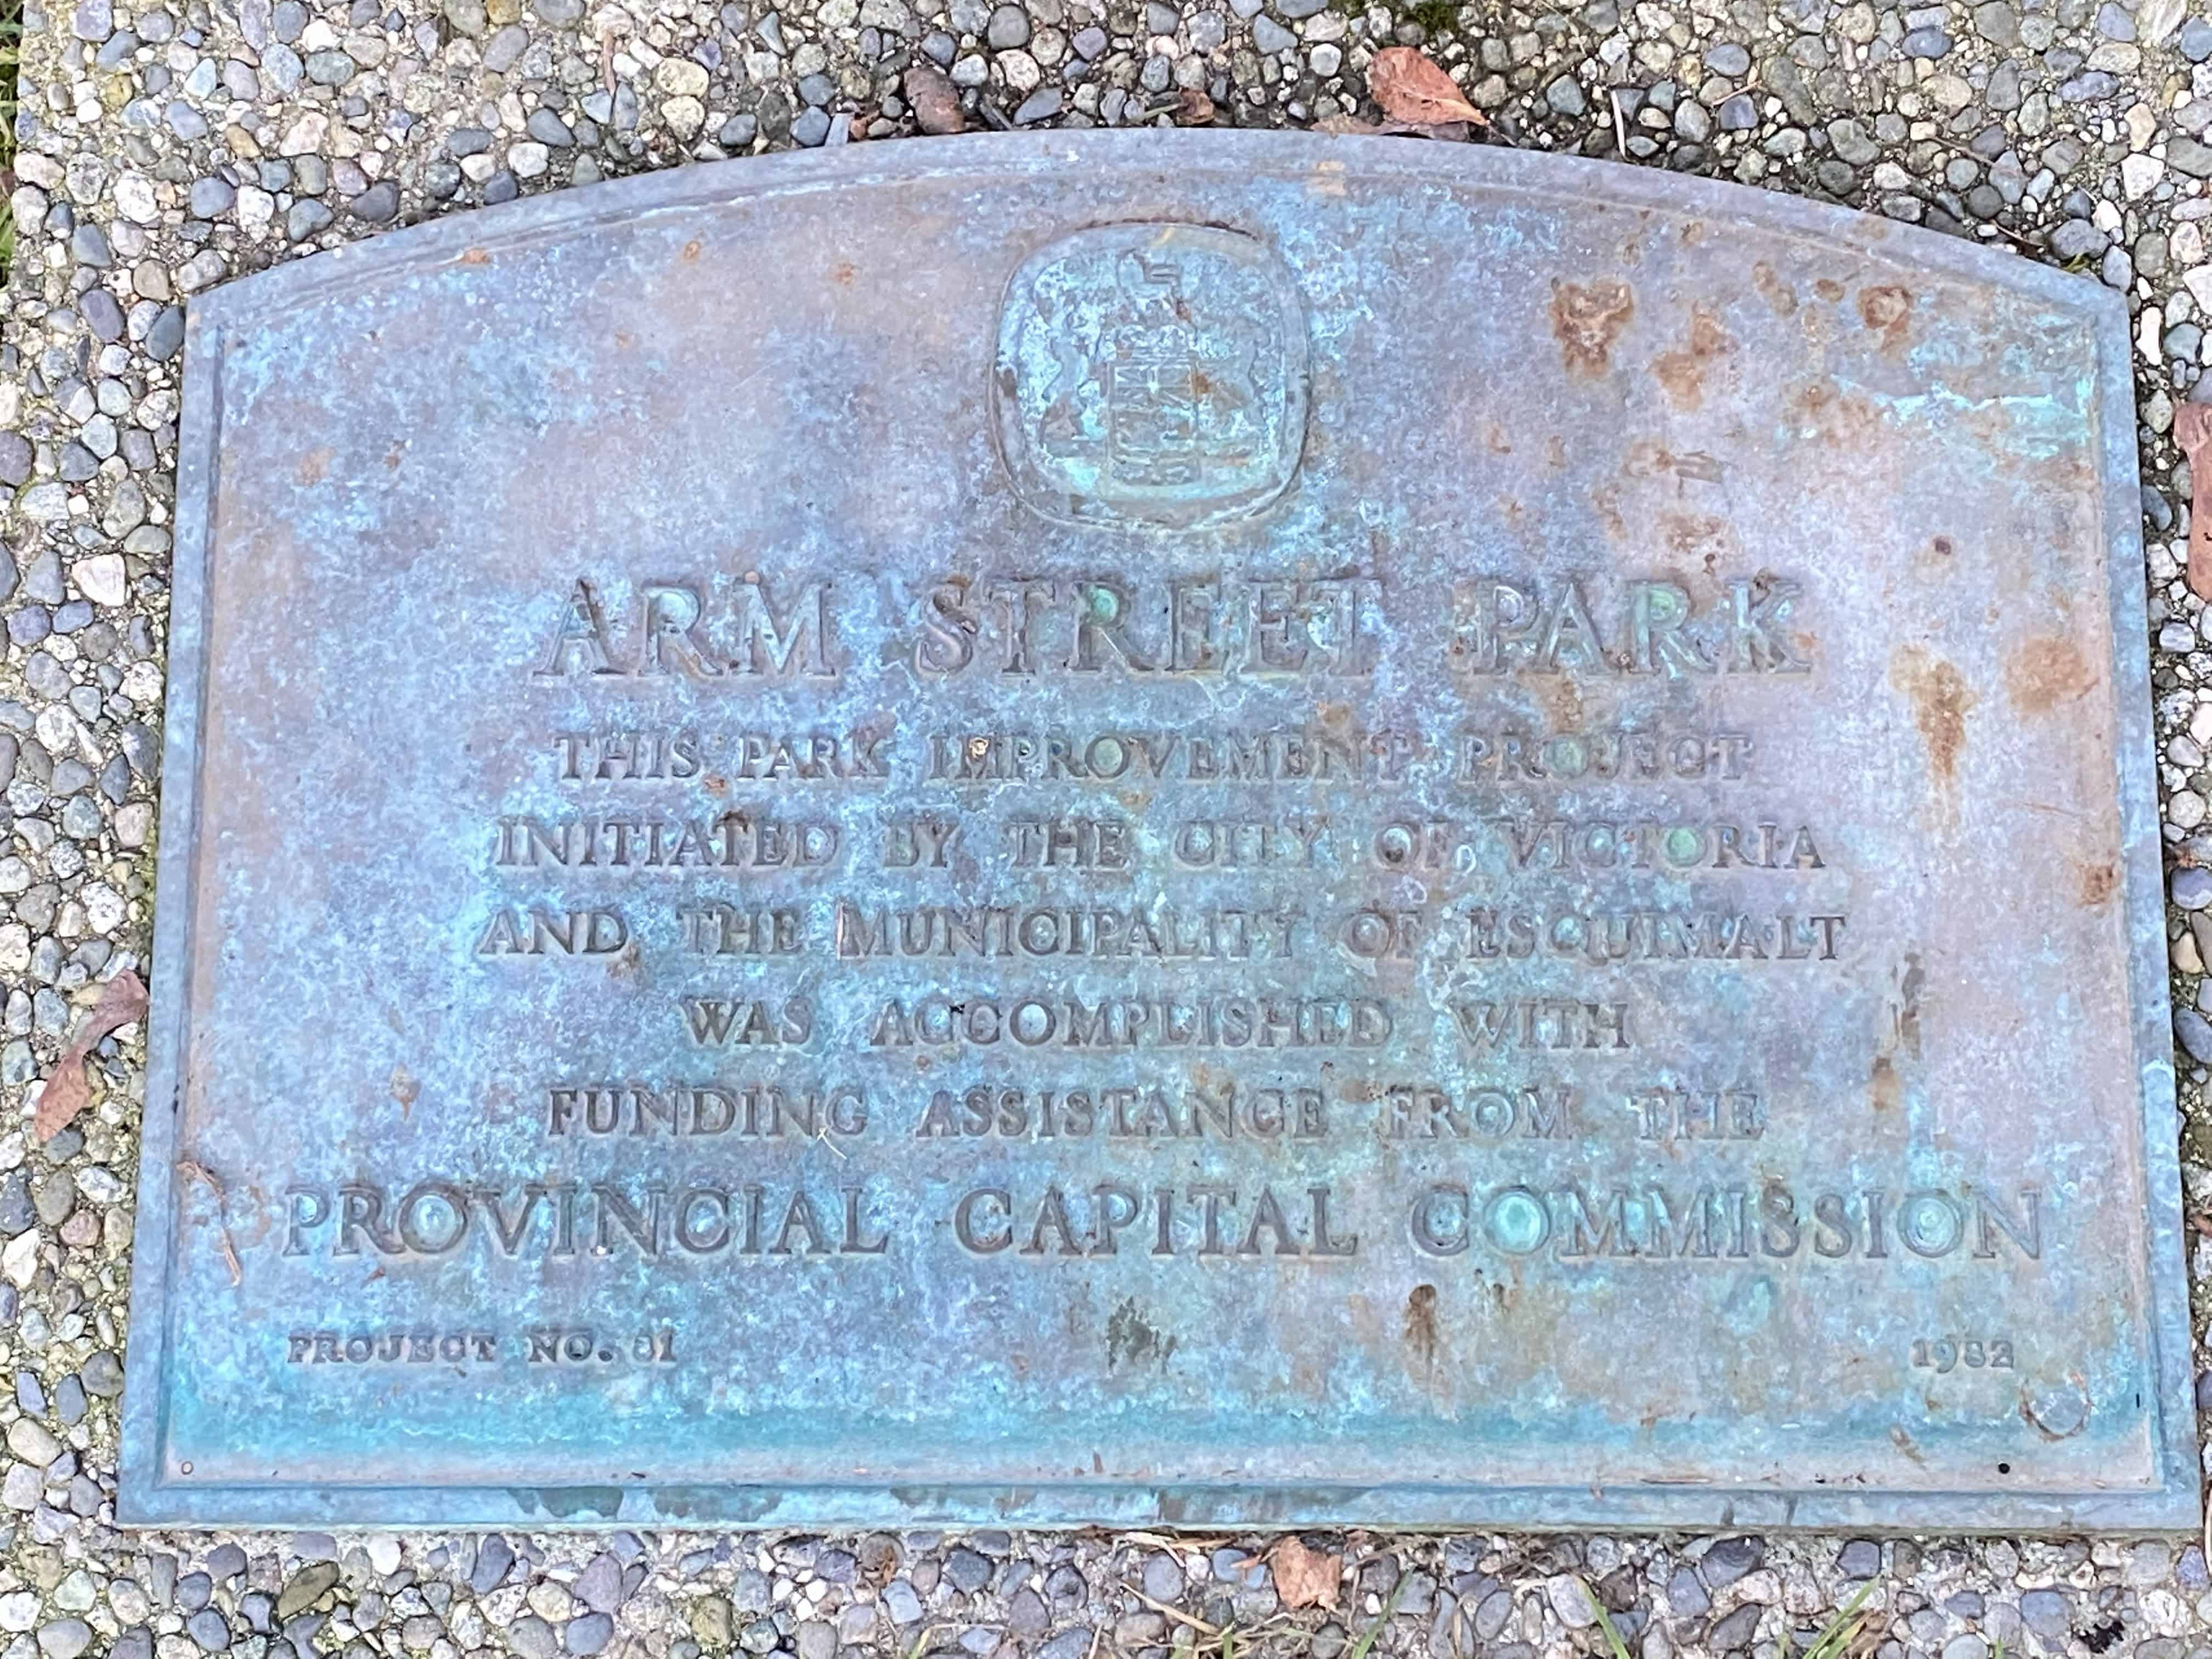 Arm Street Park signage